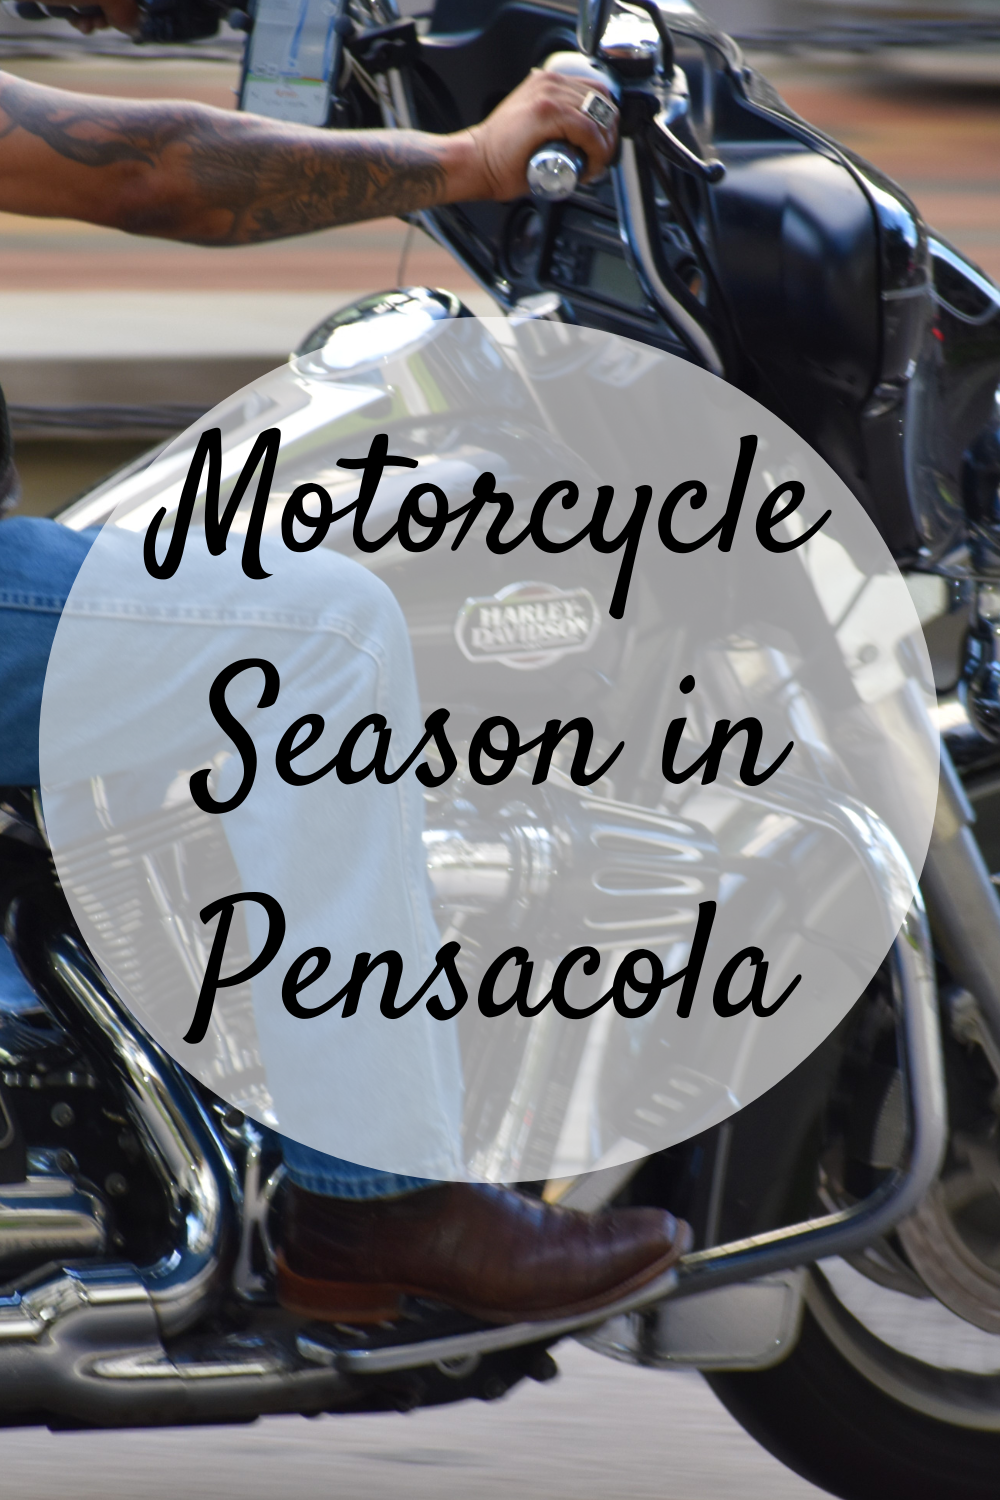 Motorcycle Season in Pensacola